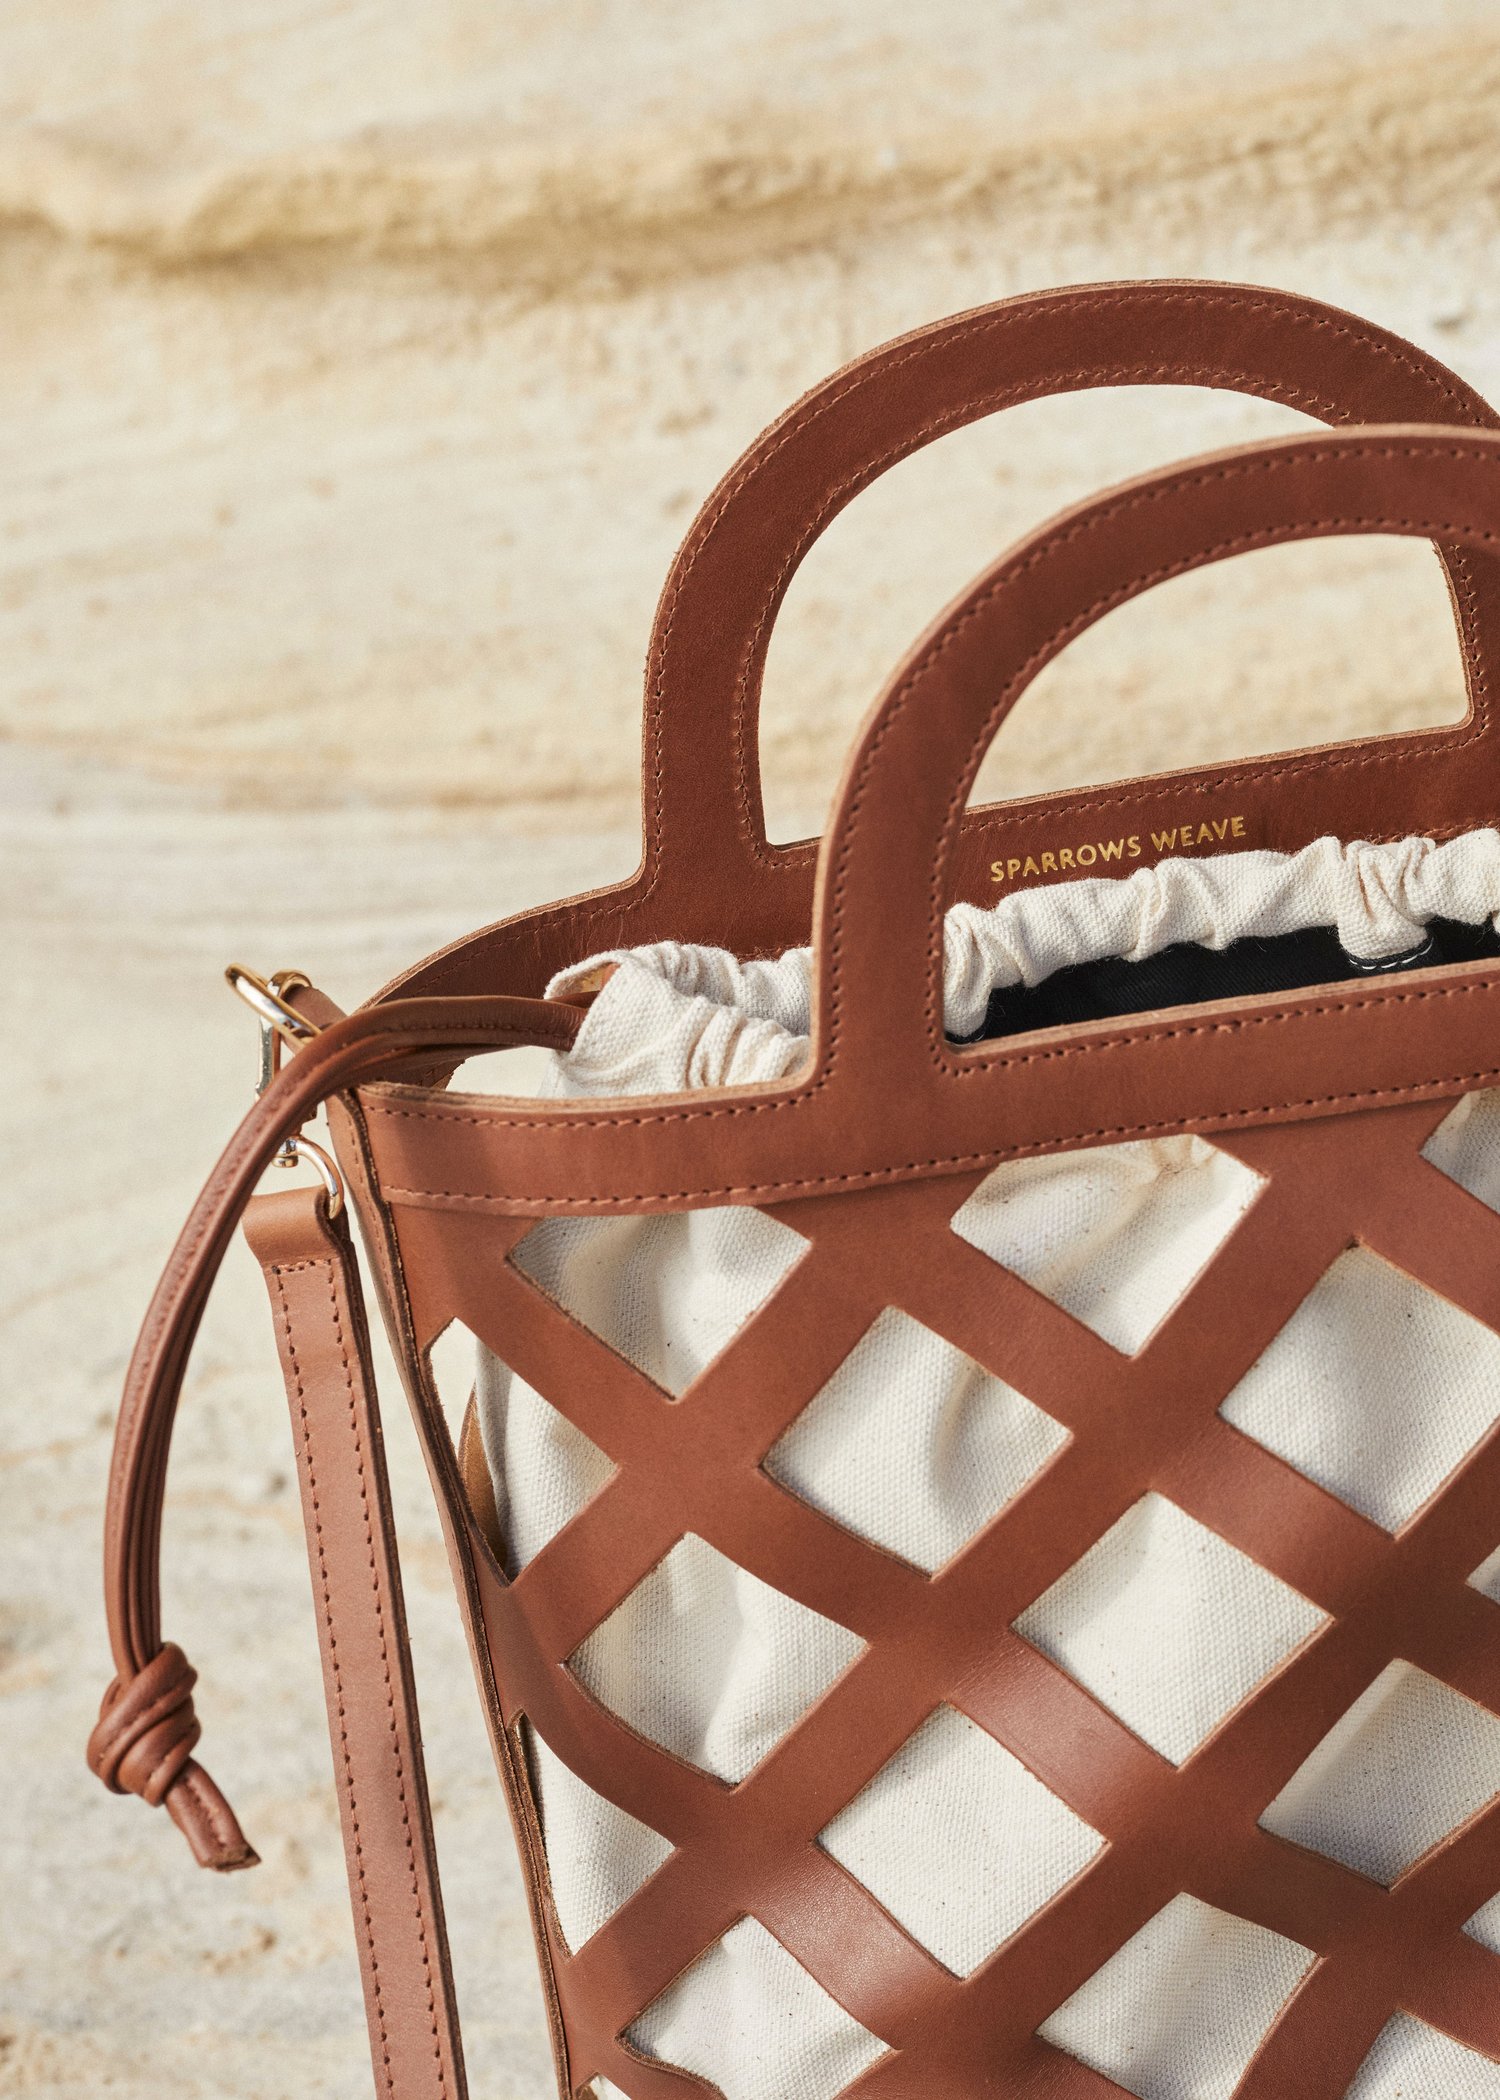 Sparrows Weave Cut out tote bag tan canvas pouch — SPARROWS WEAVE